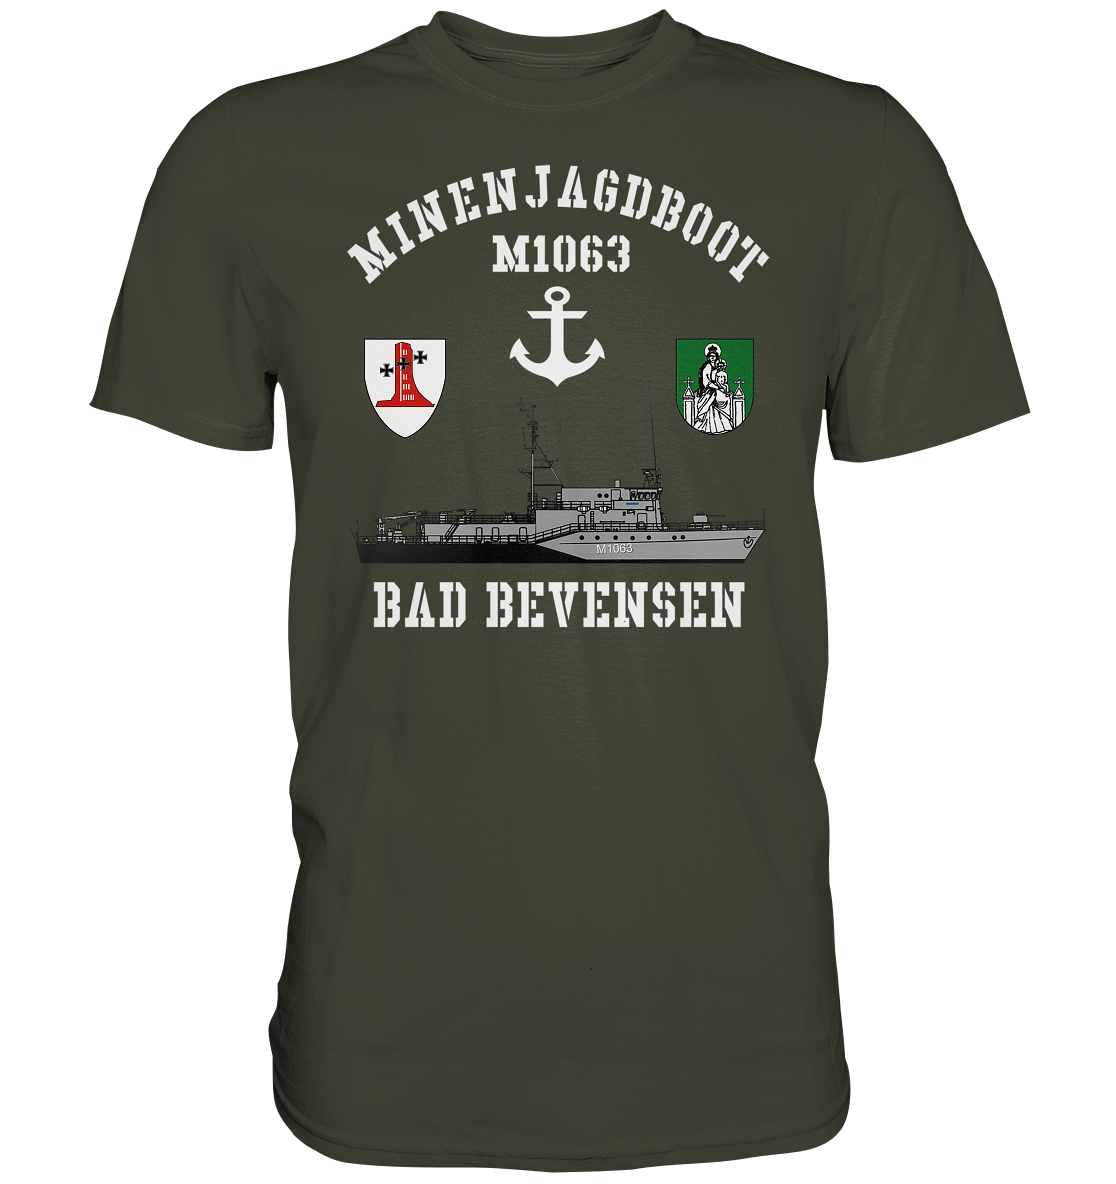 Mij.-Boot M1063 BAD BEVENSEN Anker 1.MSG - Premium Shirt